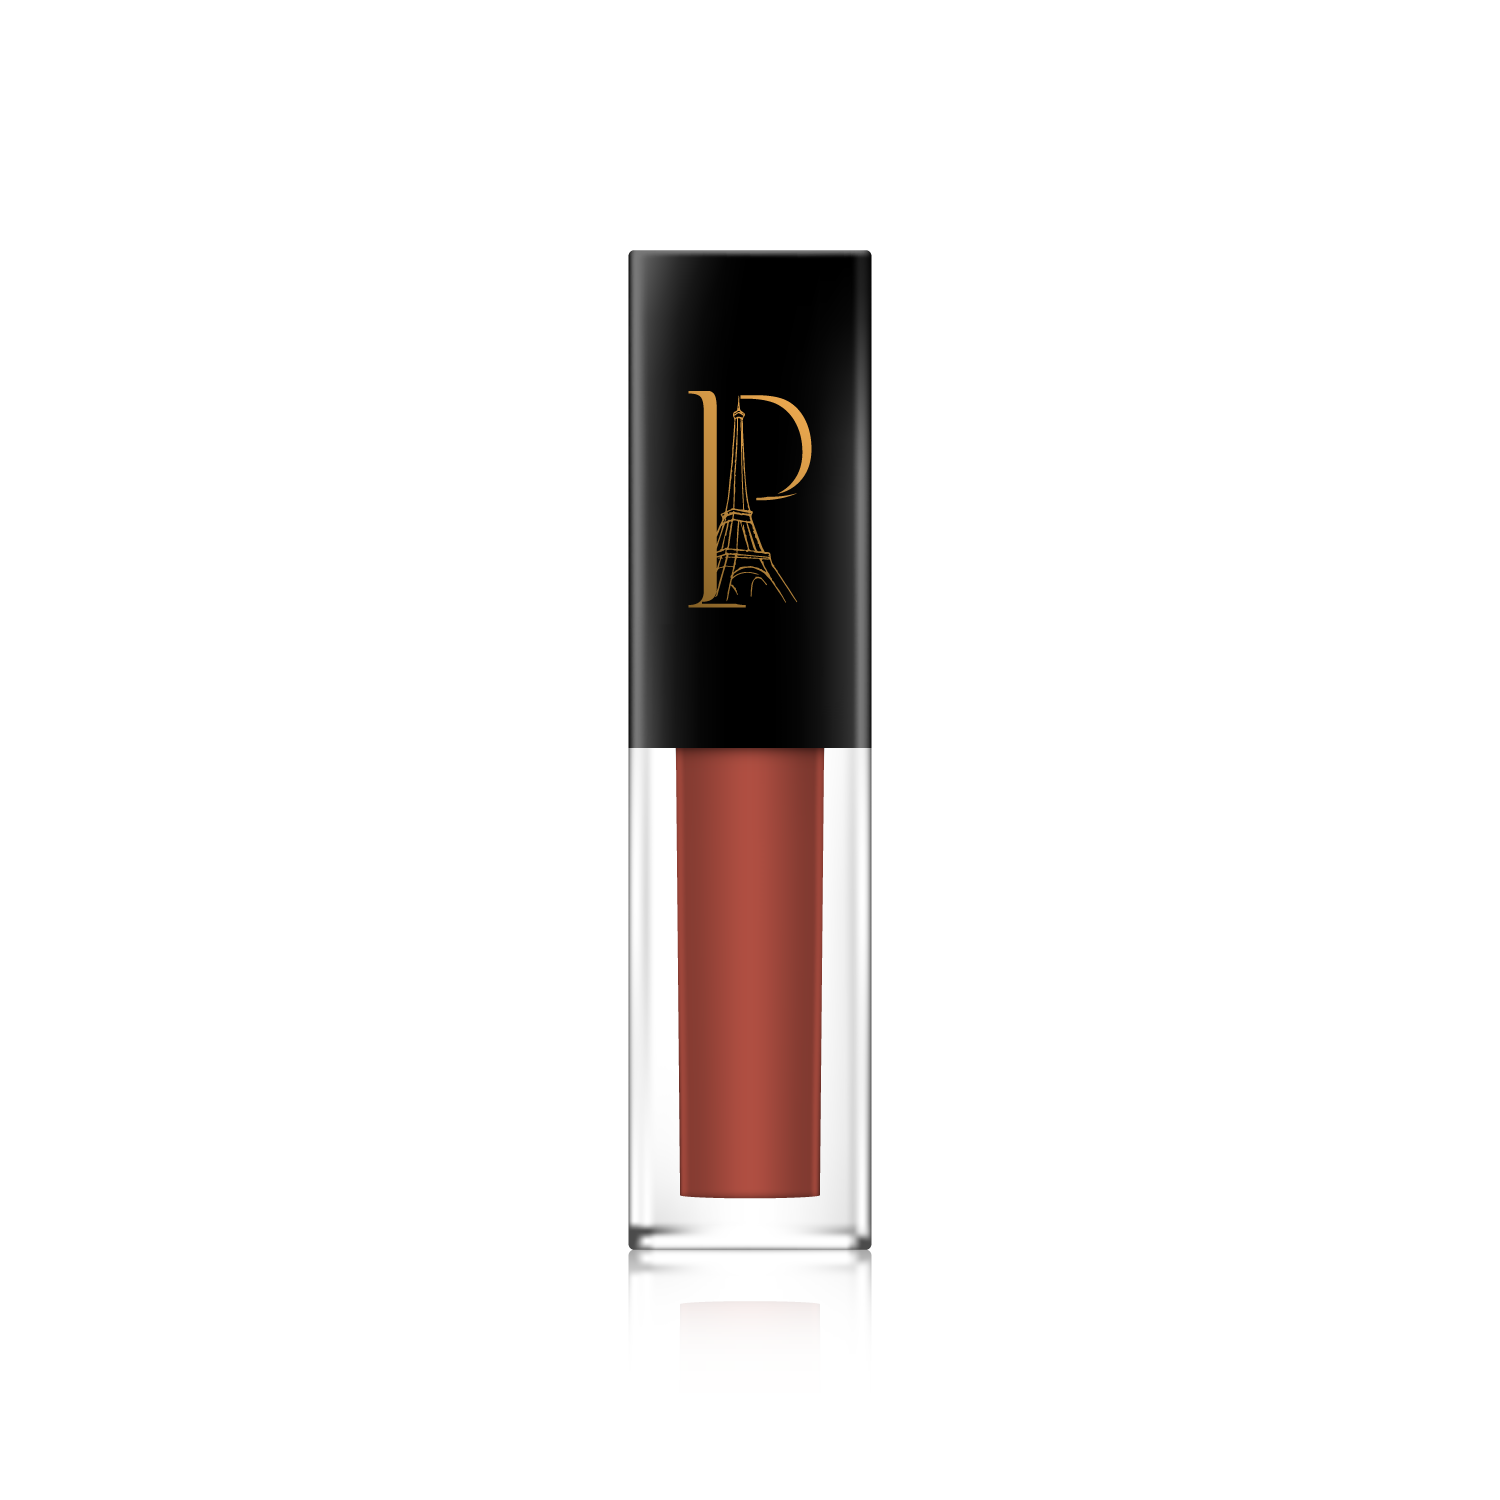 PREDIRE PARIS 5-Piece Paris Liquid Touch Prestige Matte Lipstick